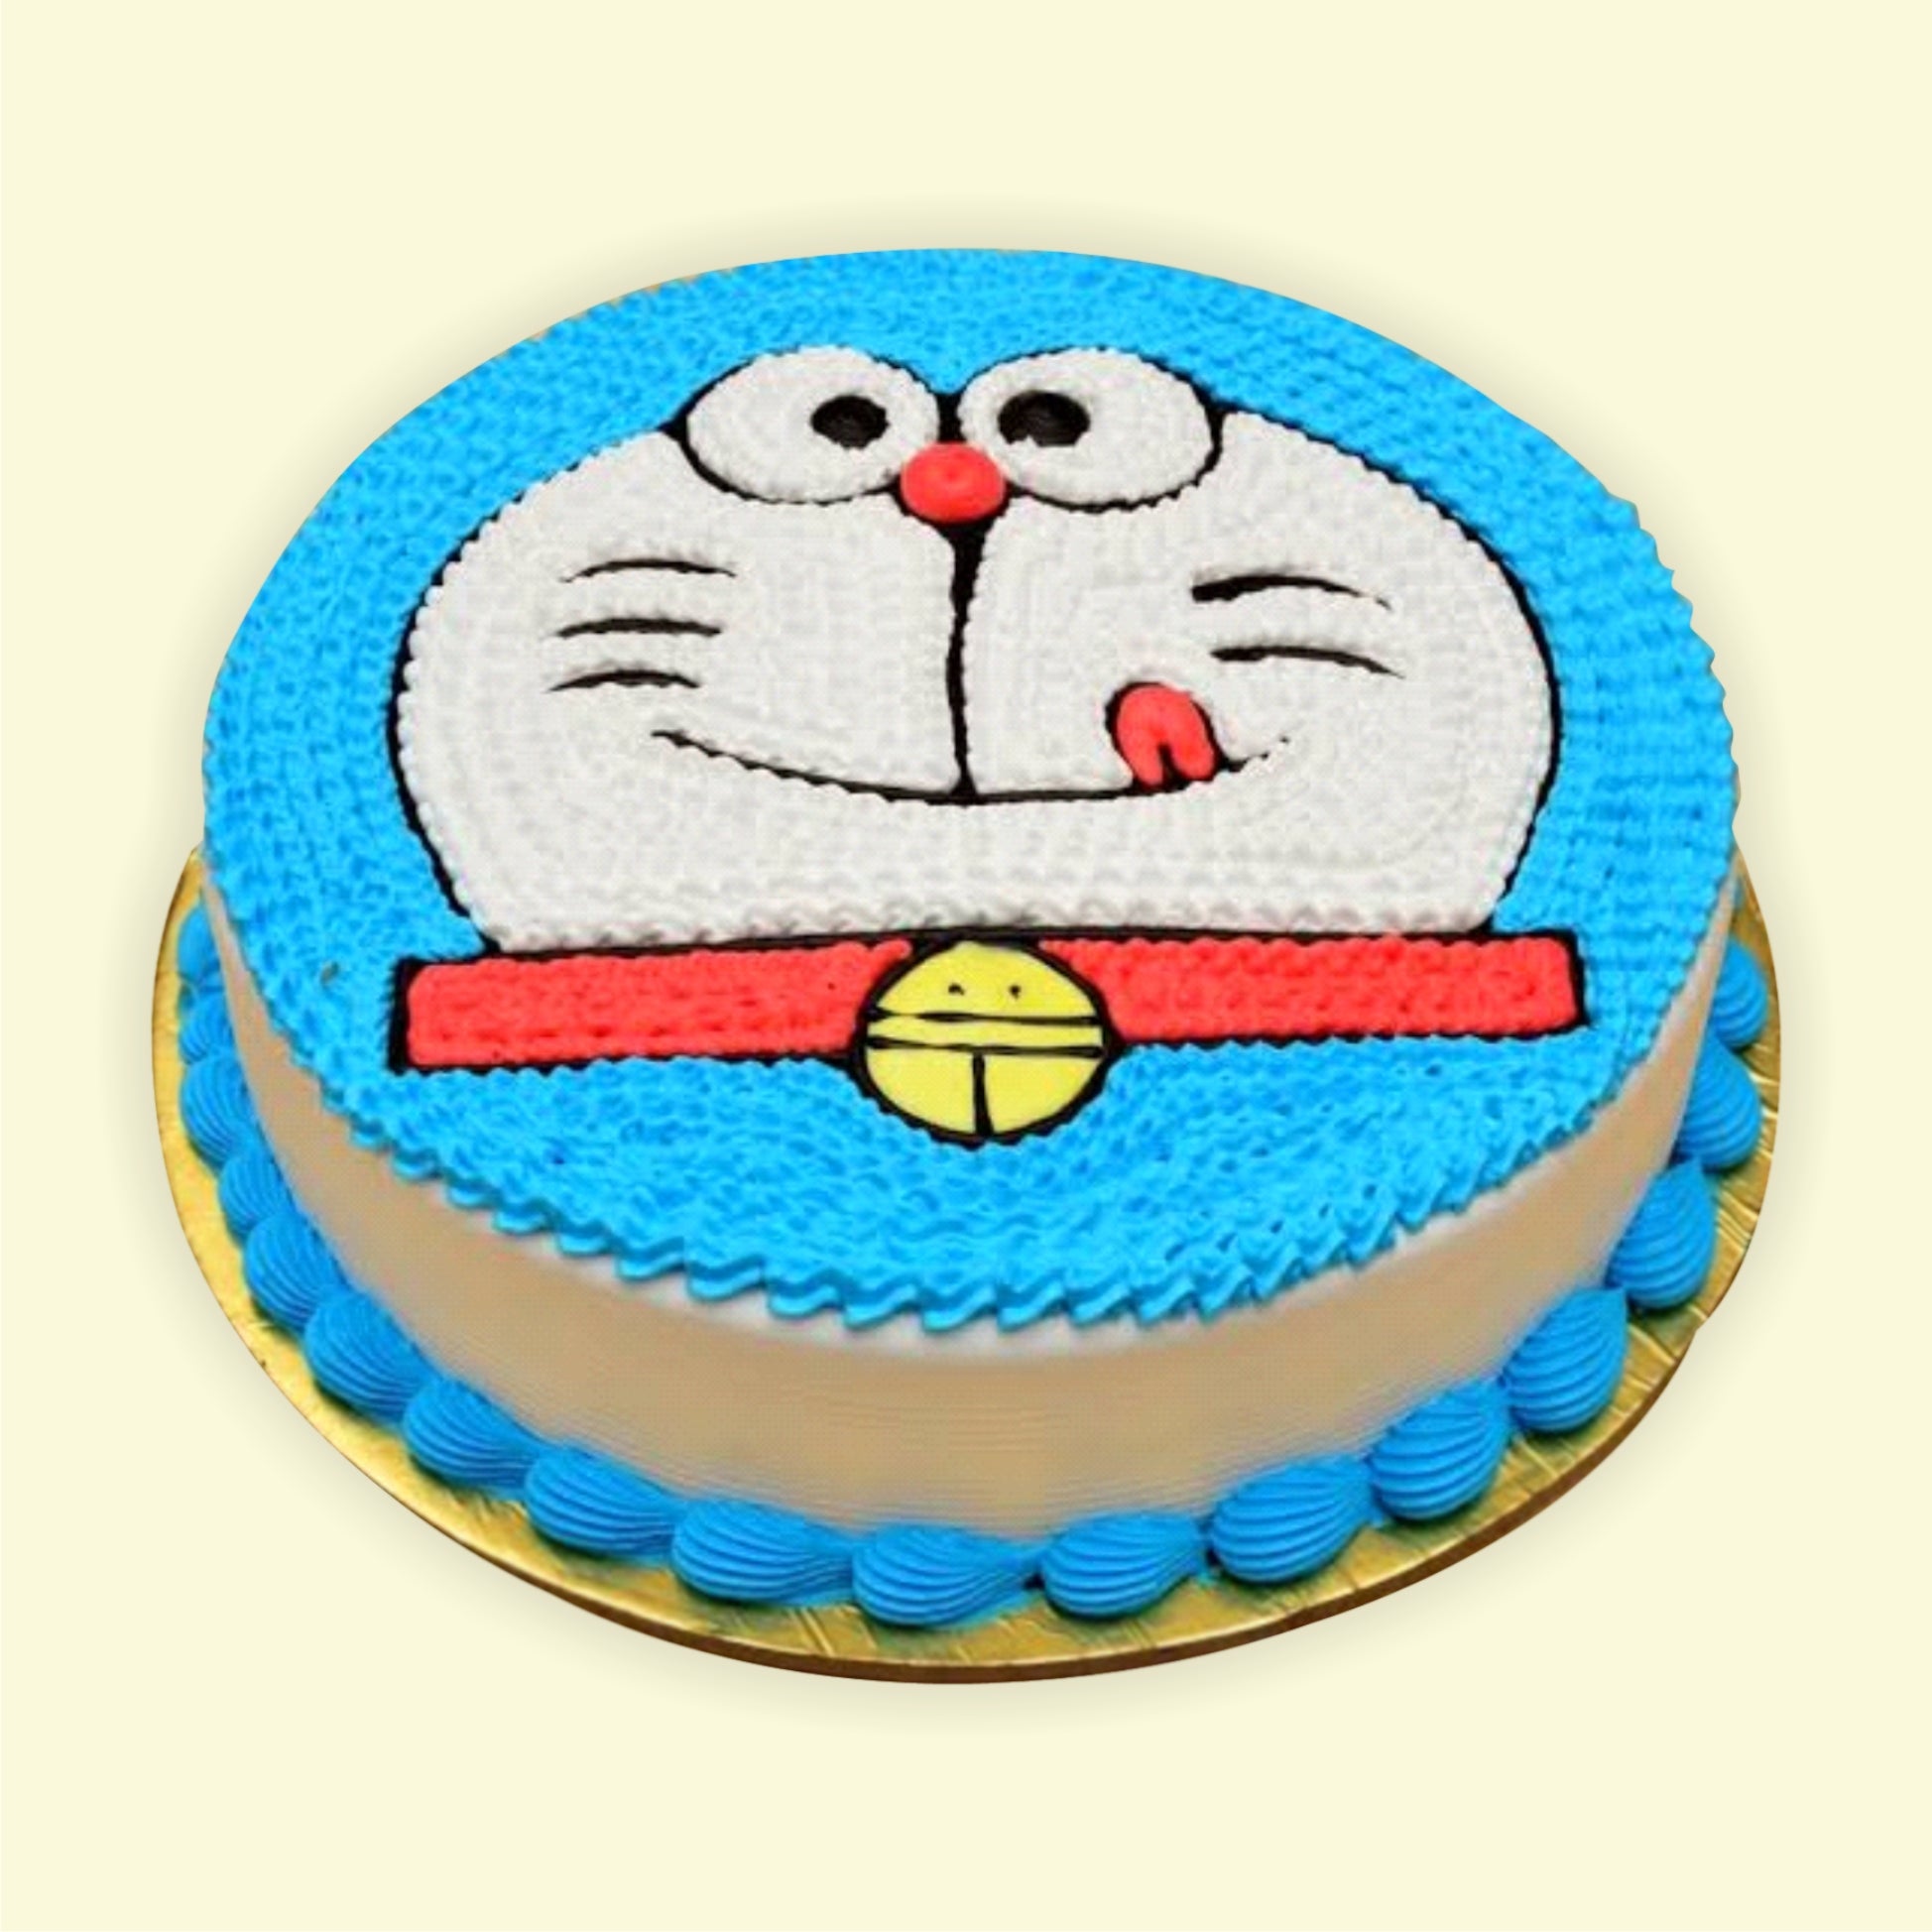 Tiger Face Cake | Yummy cake